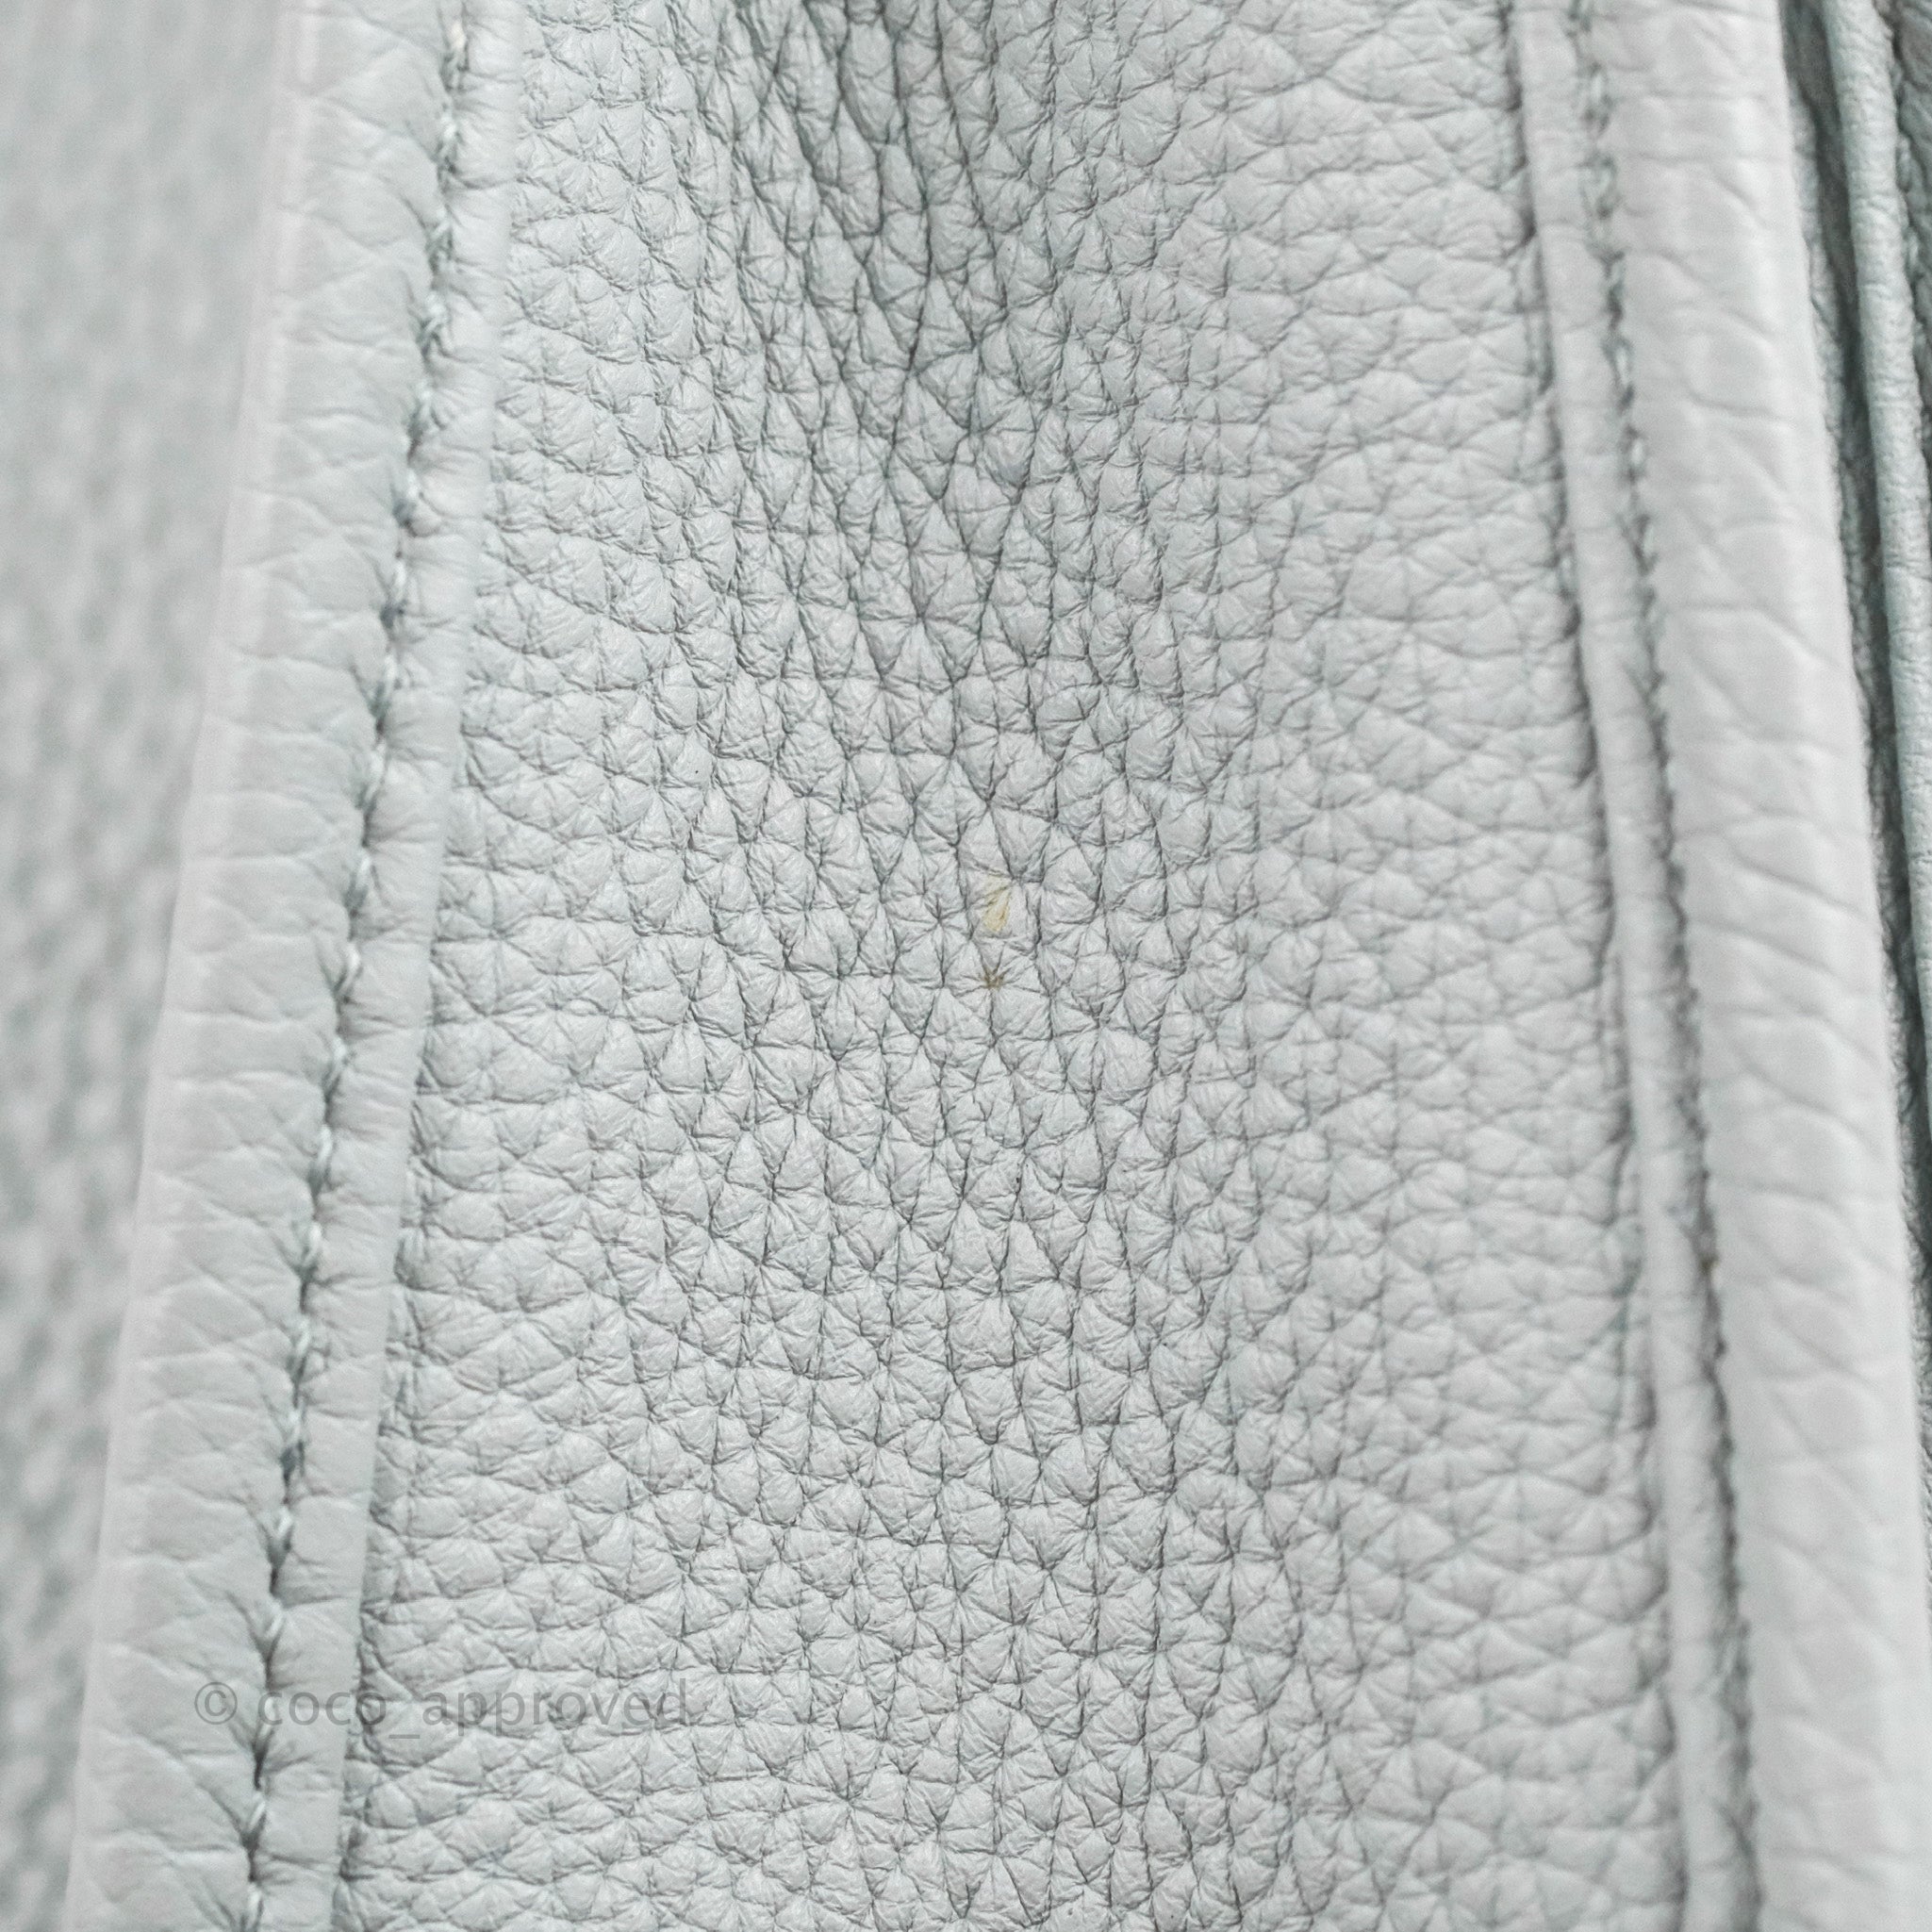 Hermès Evelyne Bleu Royal Clemence PM 29 Palladium Hardware, 2023 (Like New), Blue/Silver Womens Handbag